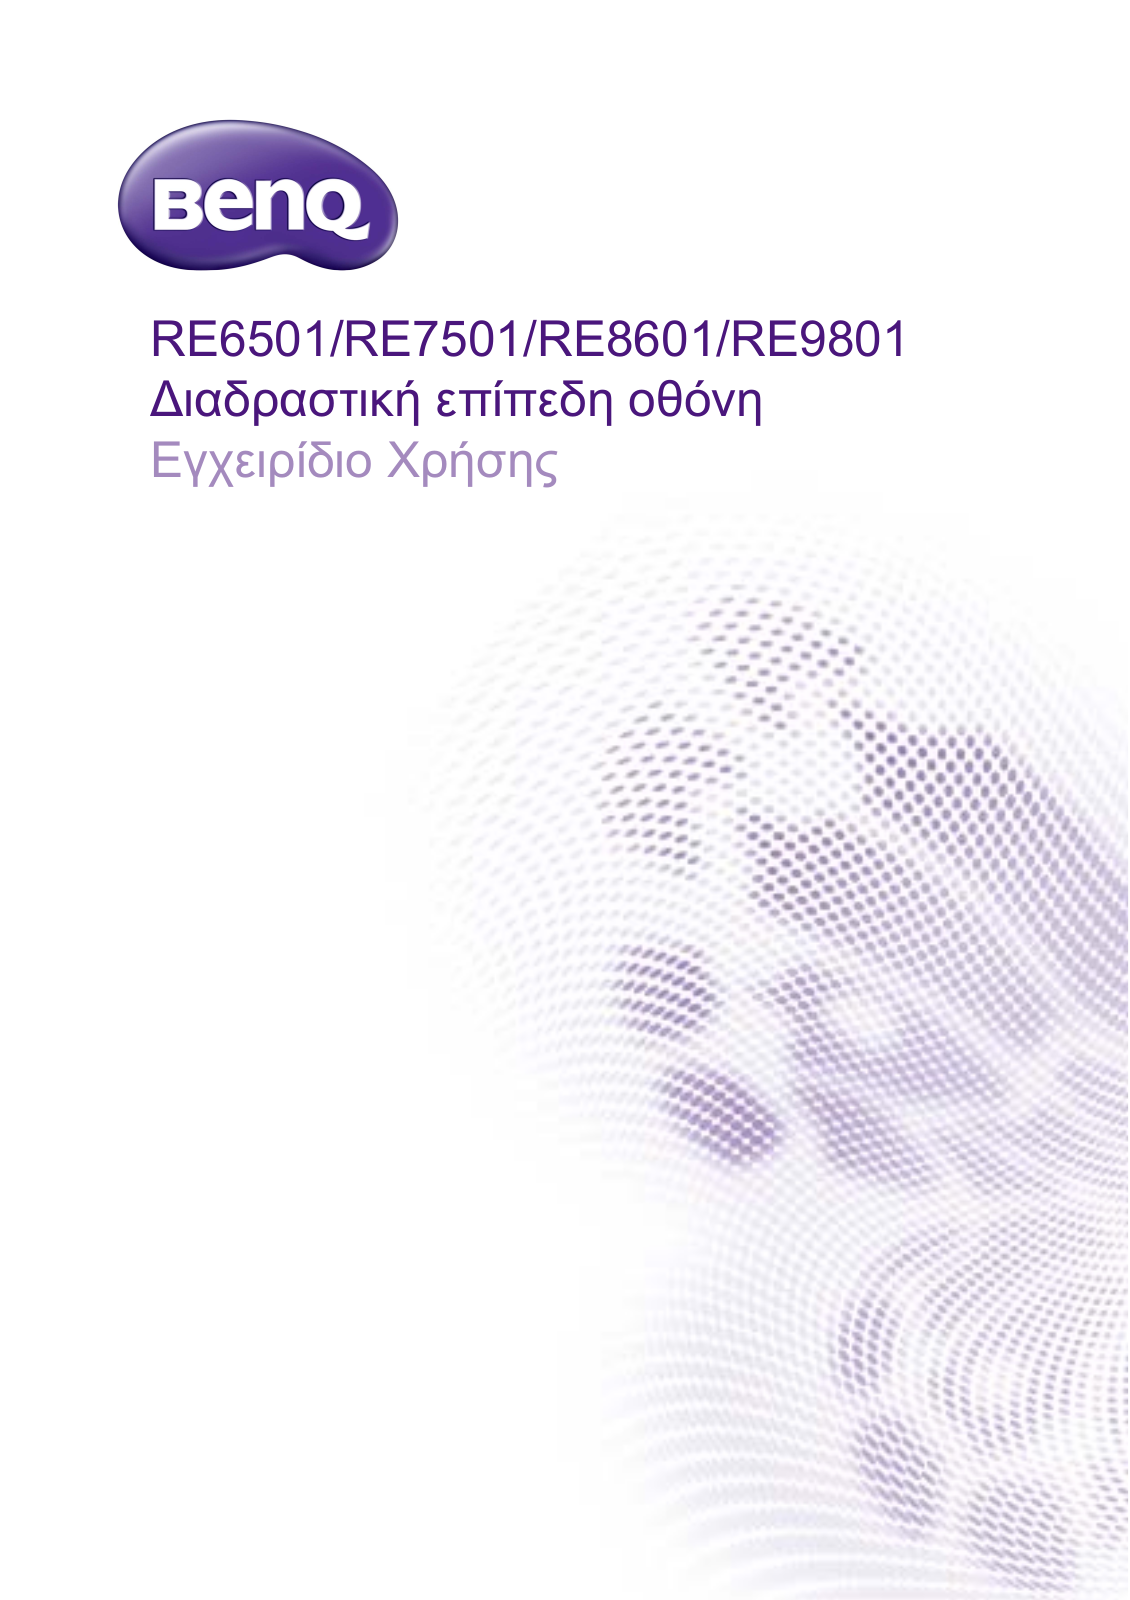 Benq RE6501, RE7501, RE8601, RE9801 User Manual